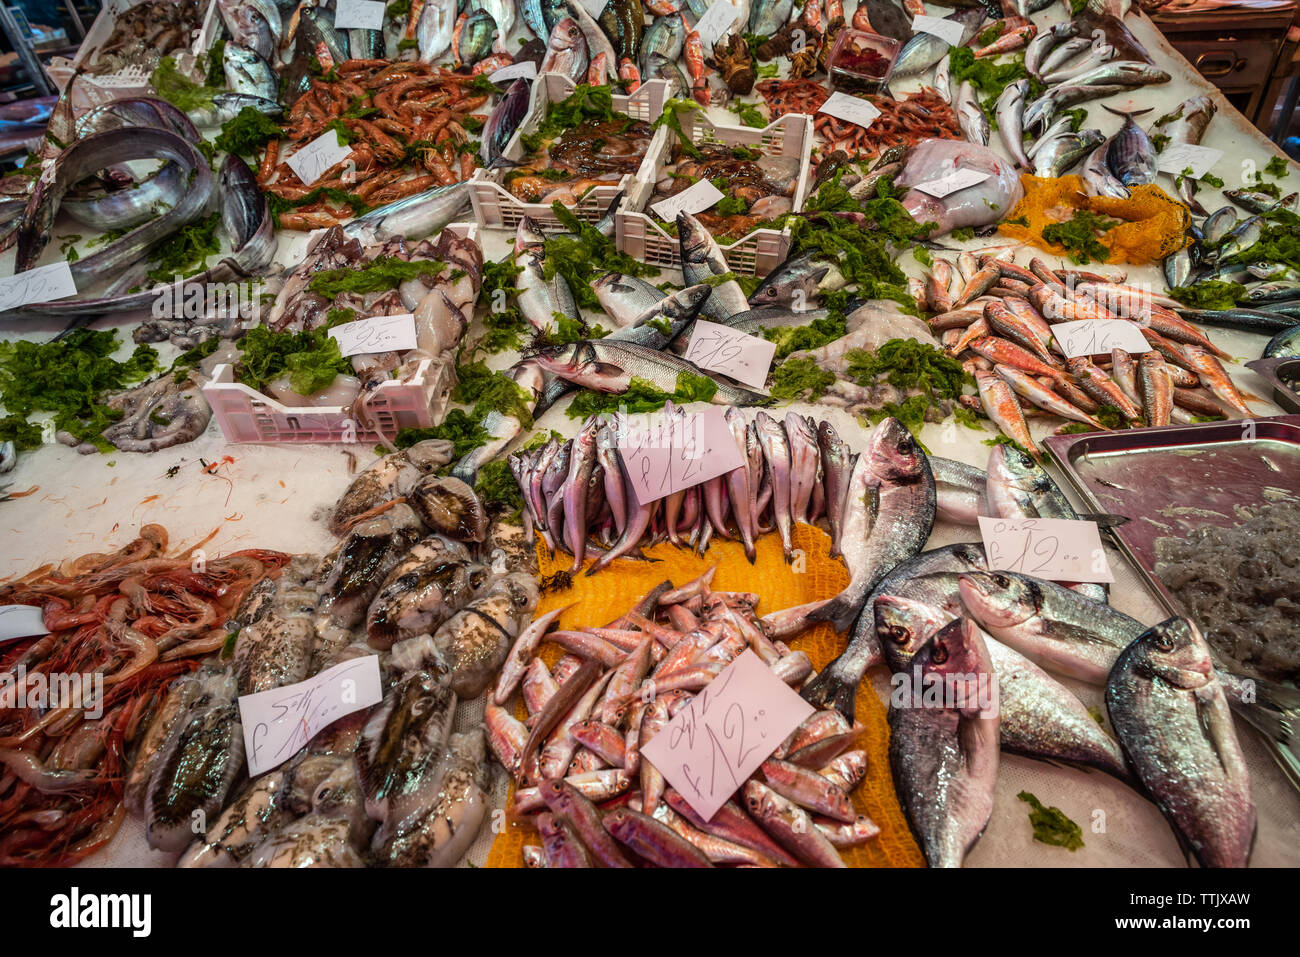 Seafood at La Pescheria fish market in Catania, Sicily, Italy Stock Photo -  Alamy